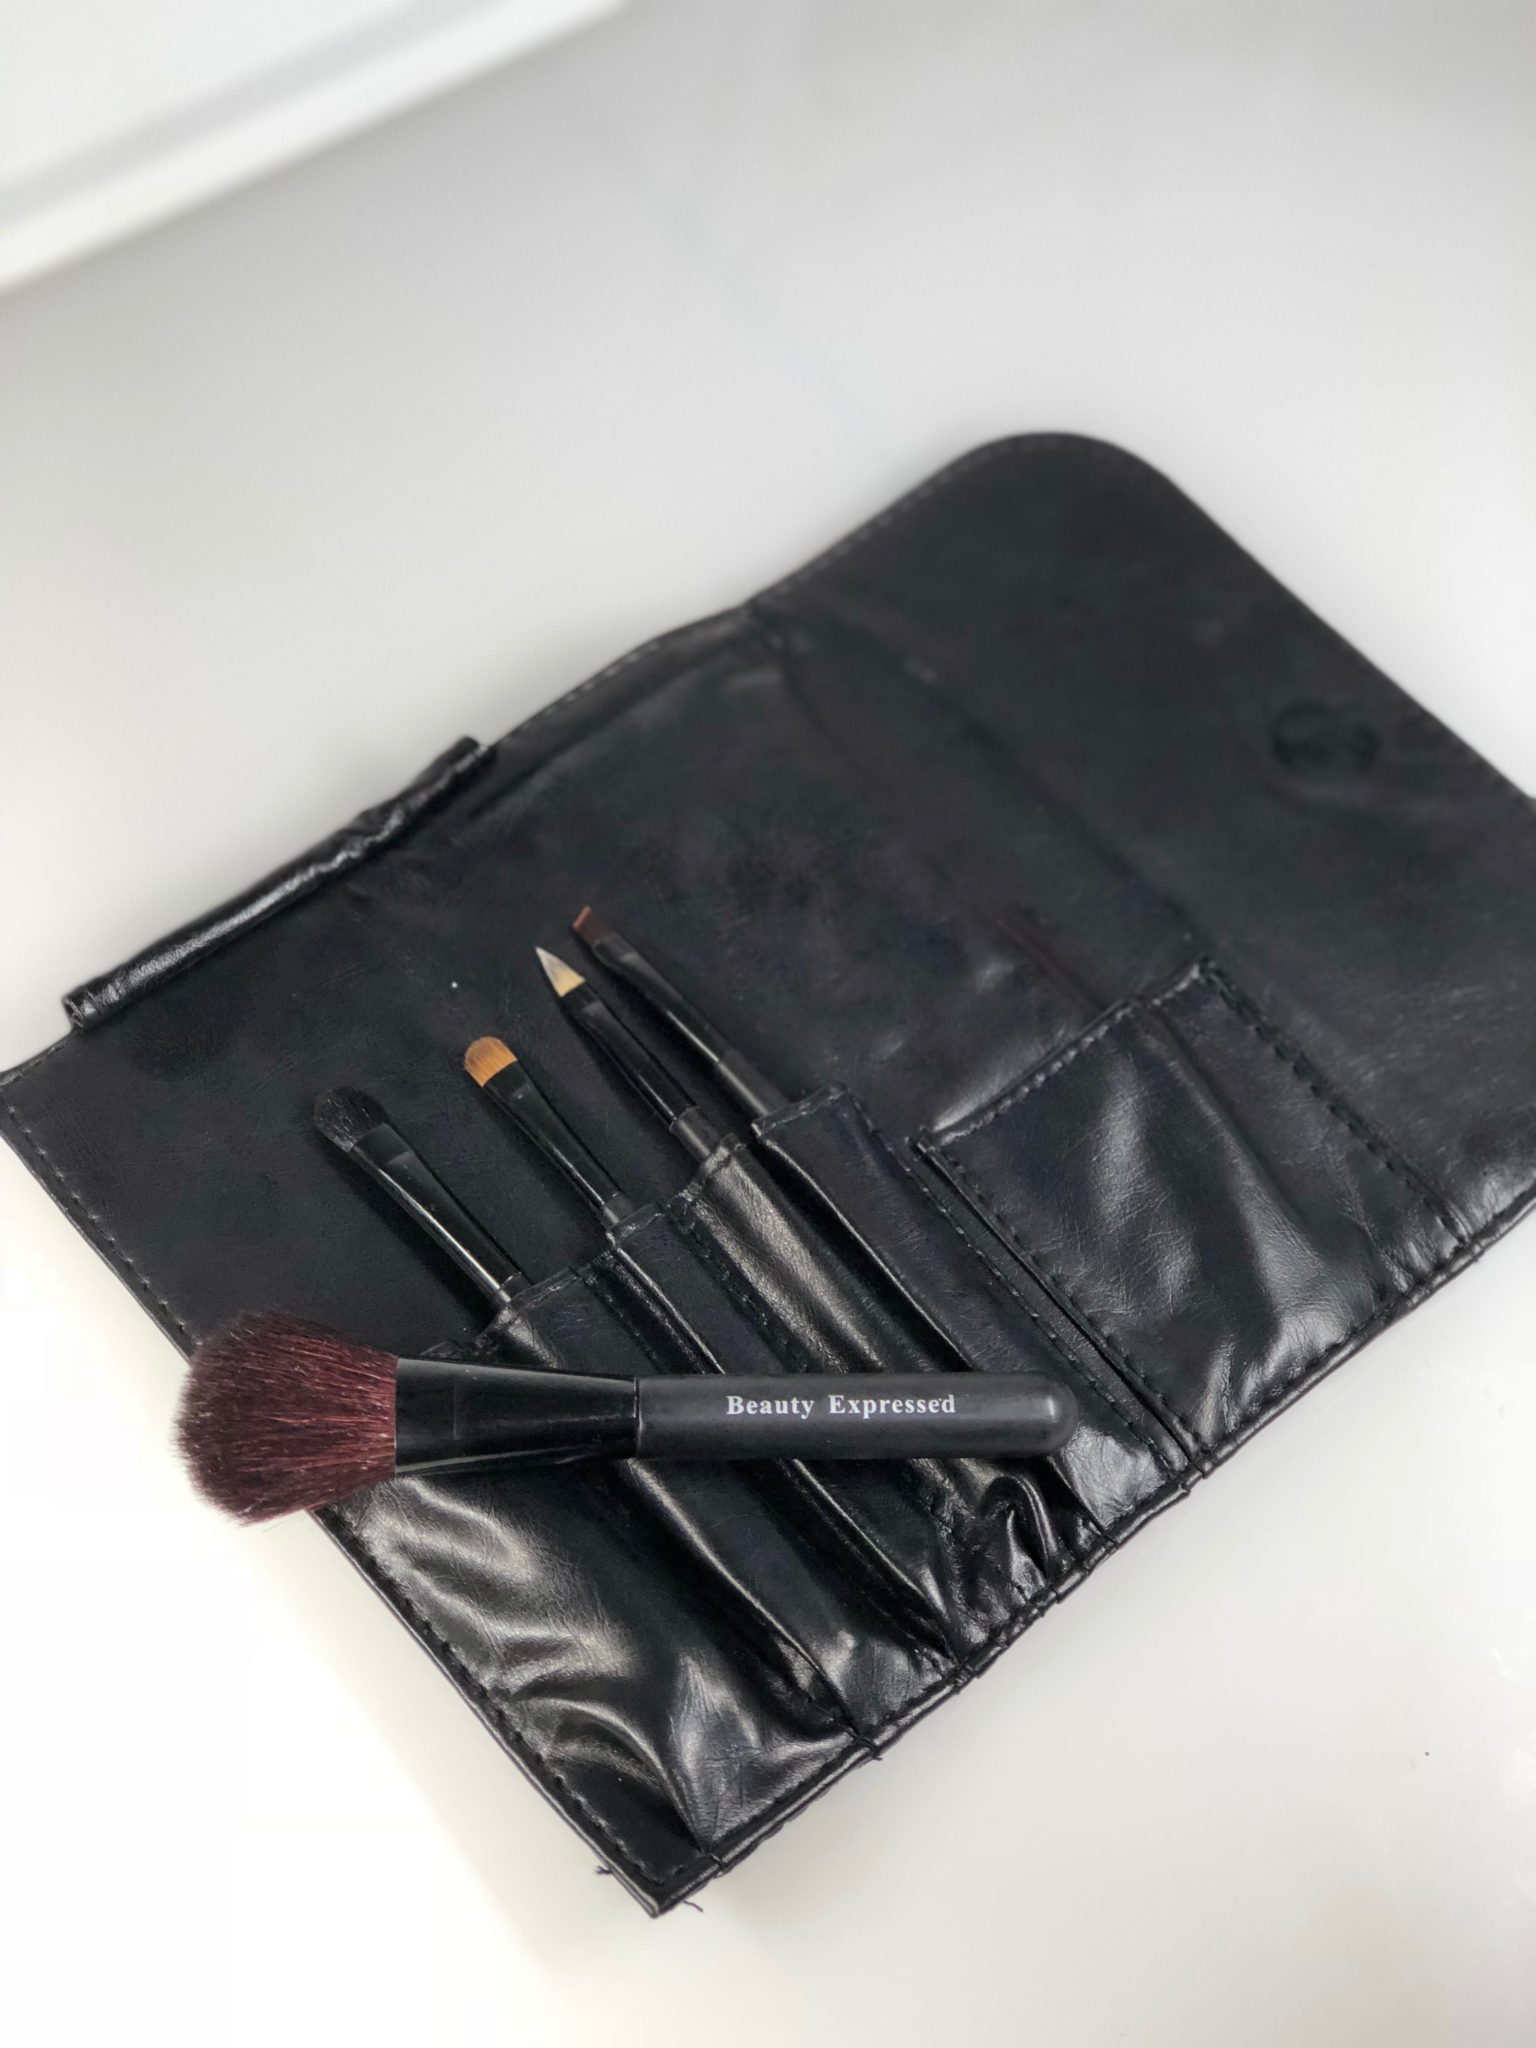 Travel Makeup Kit